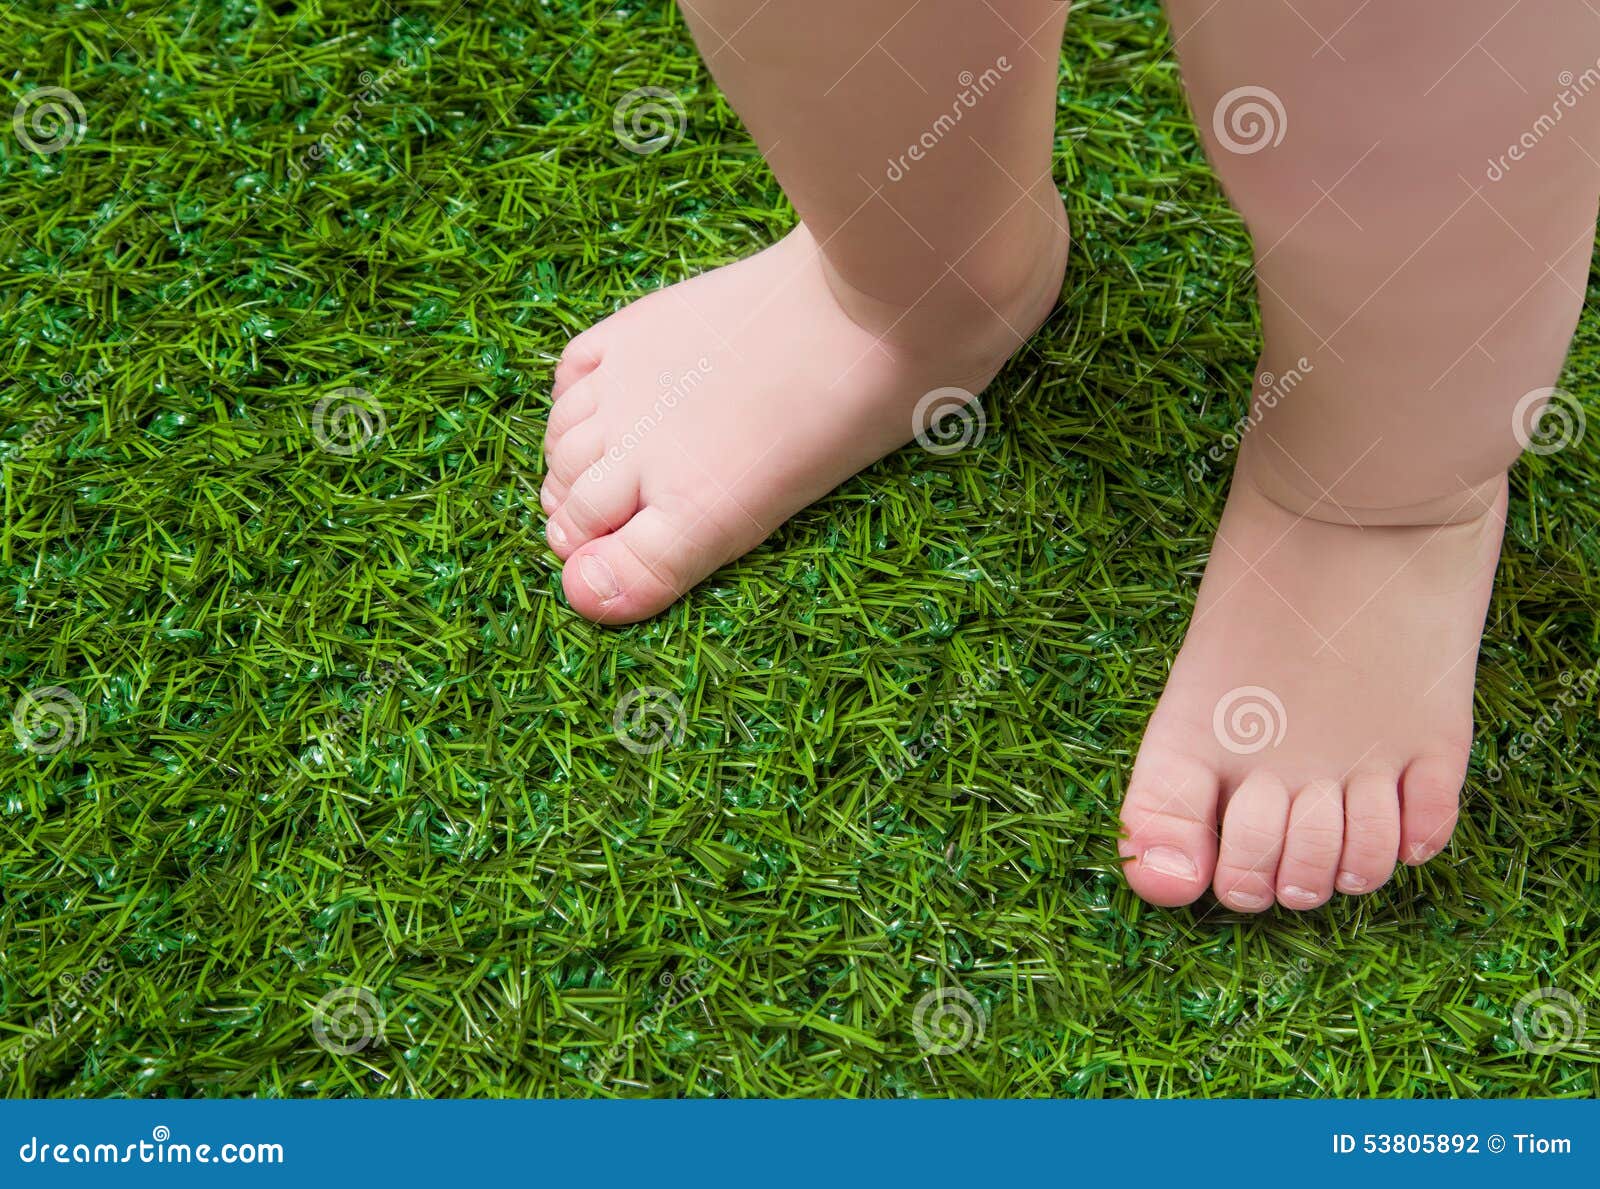 https://thumbs.dreamstime.com/z/baby-bare-legs-standing-green-grass-having-fun-outdoors-53805892.jpg